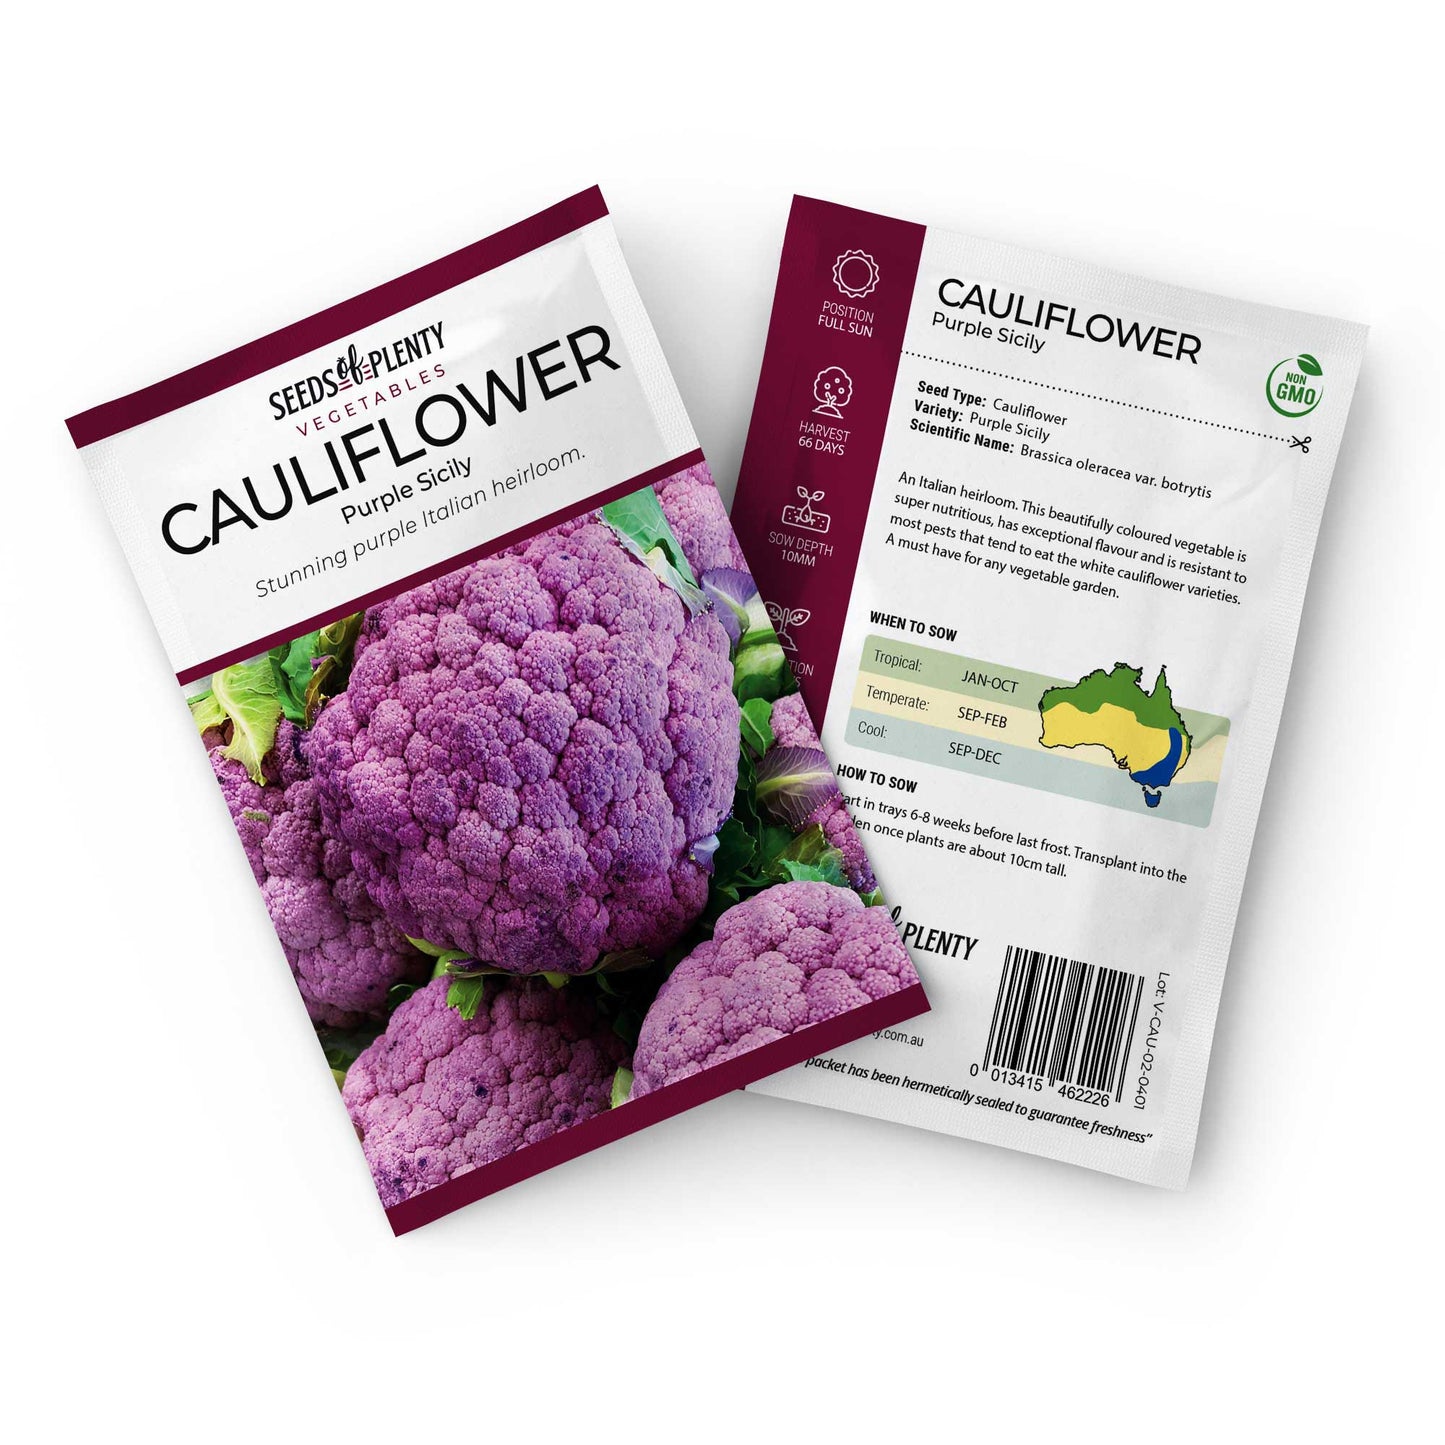 CAULIFLOWER - Purple Sicily Default Title